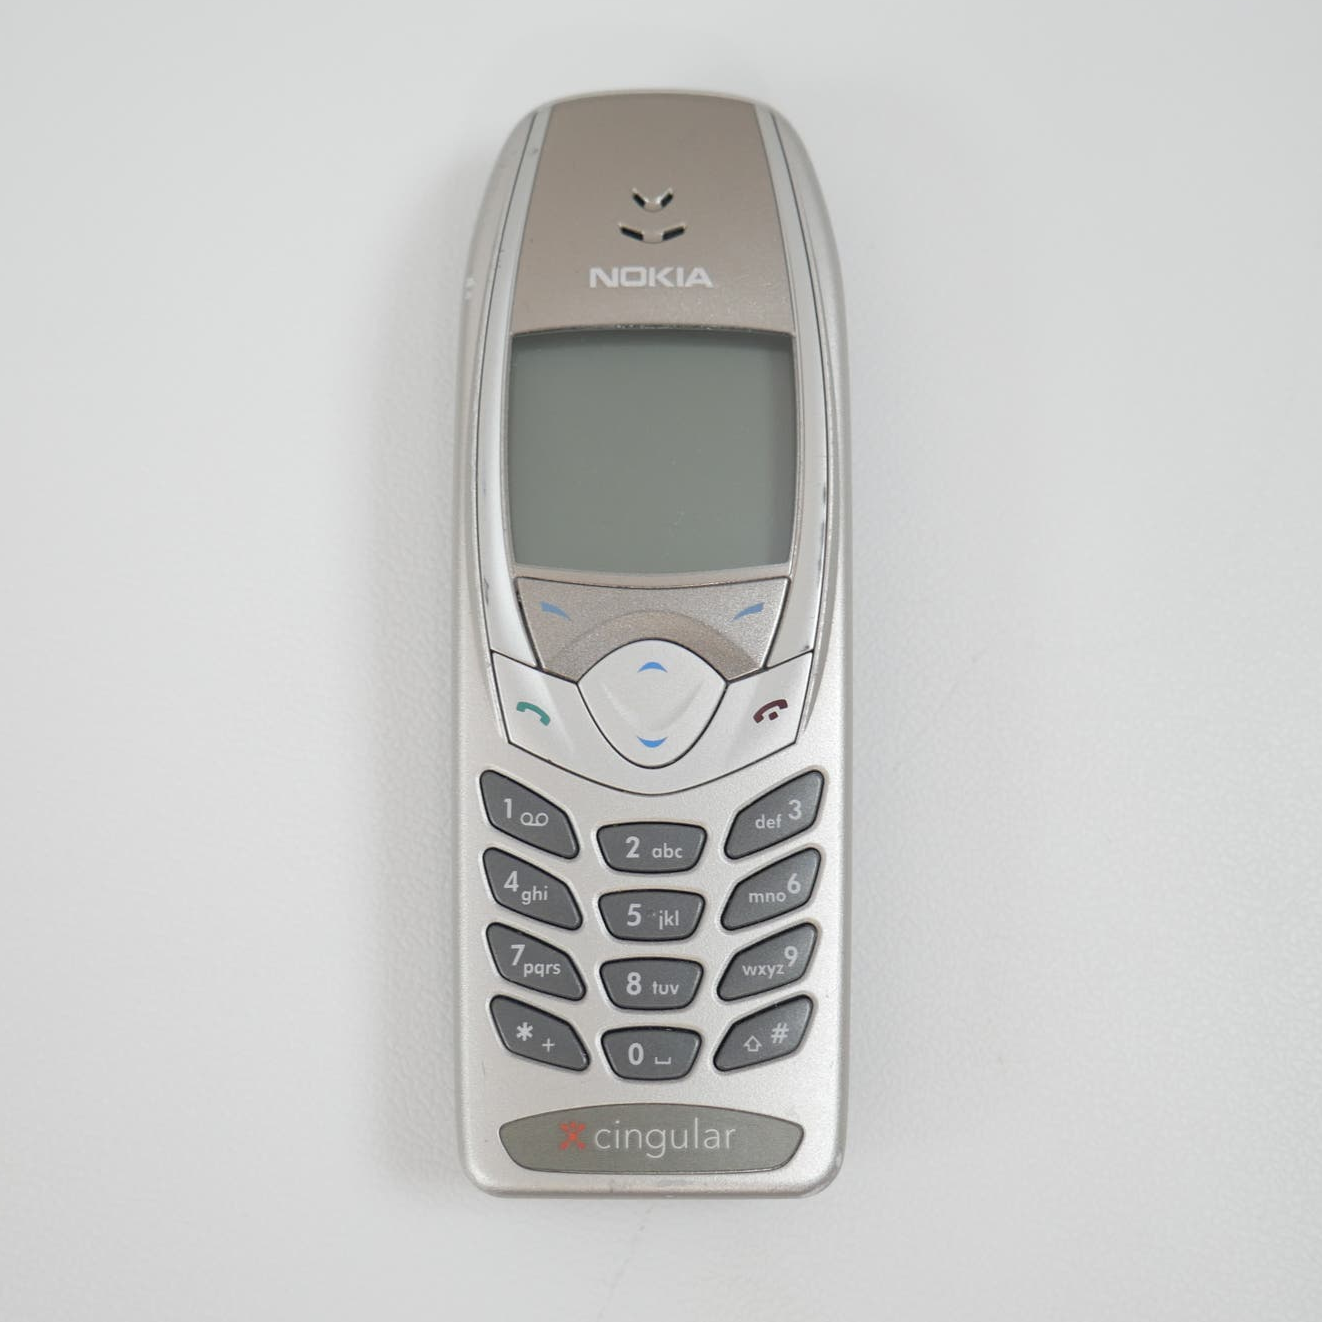 Primary image for Nokia 6340i Silver/Black Cingular Phone